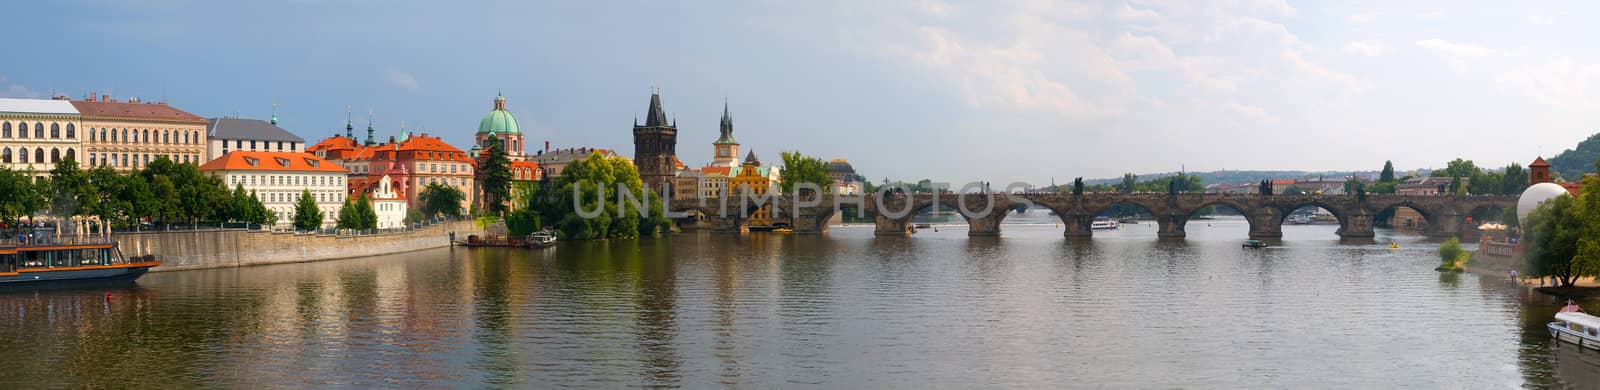 Prague panorama, Charles Bridge. by photocreo